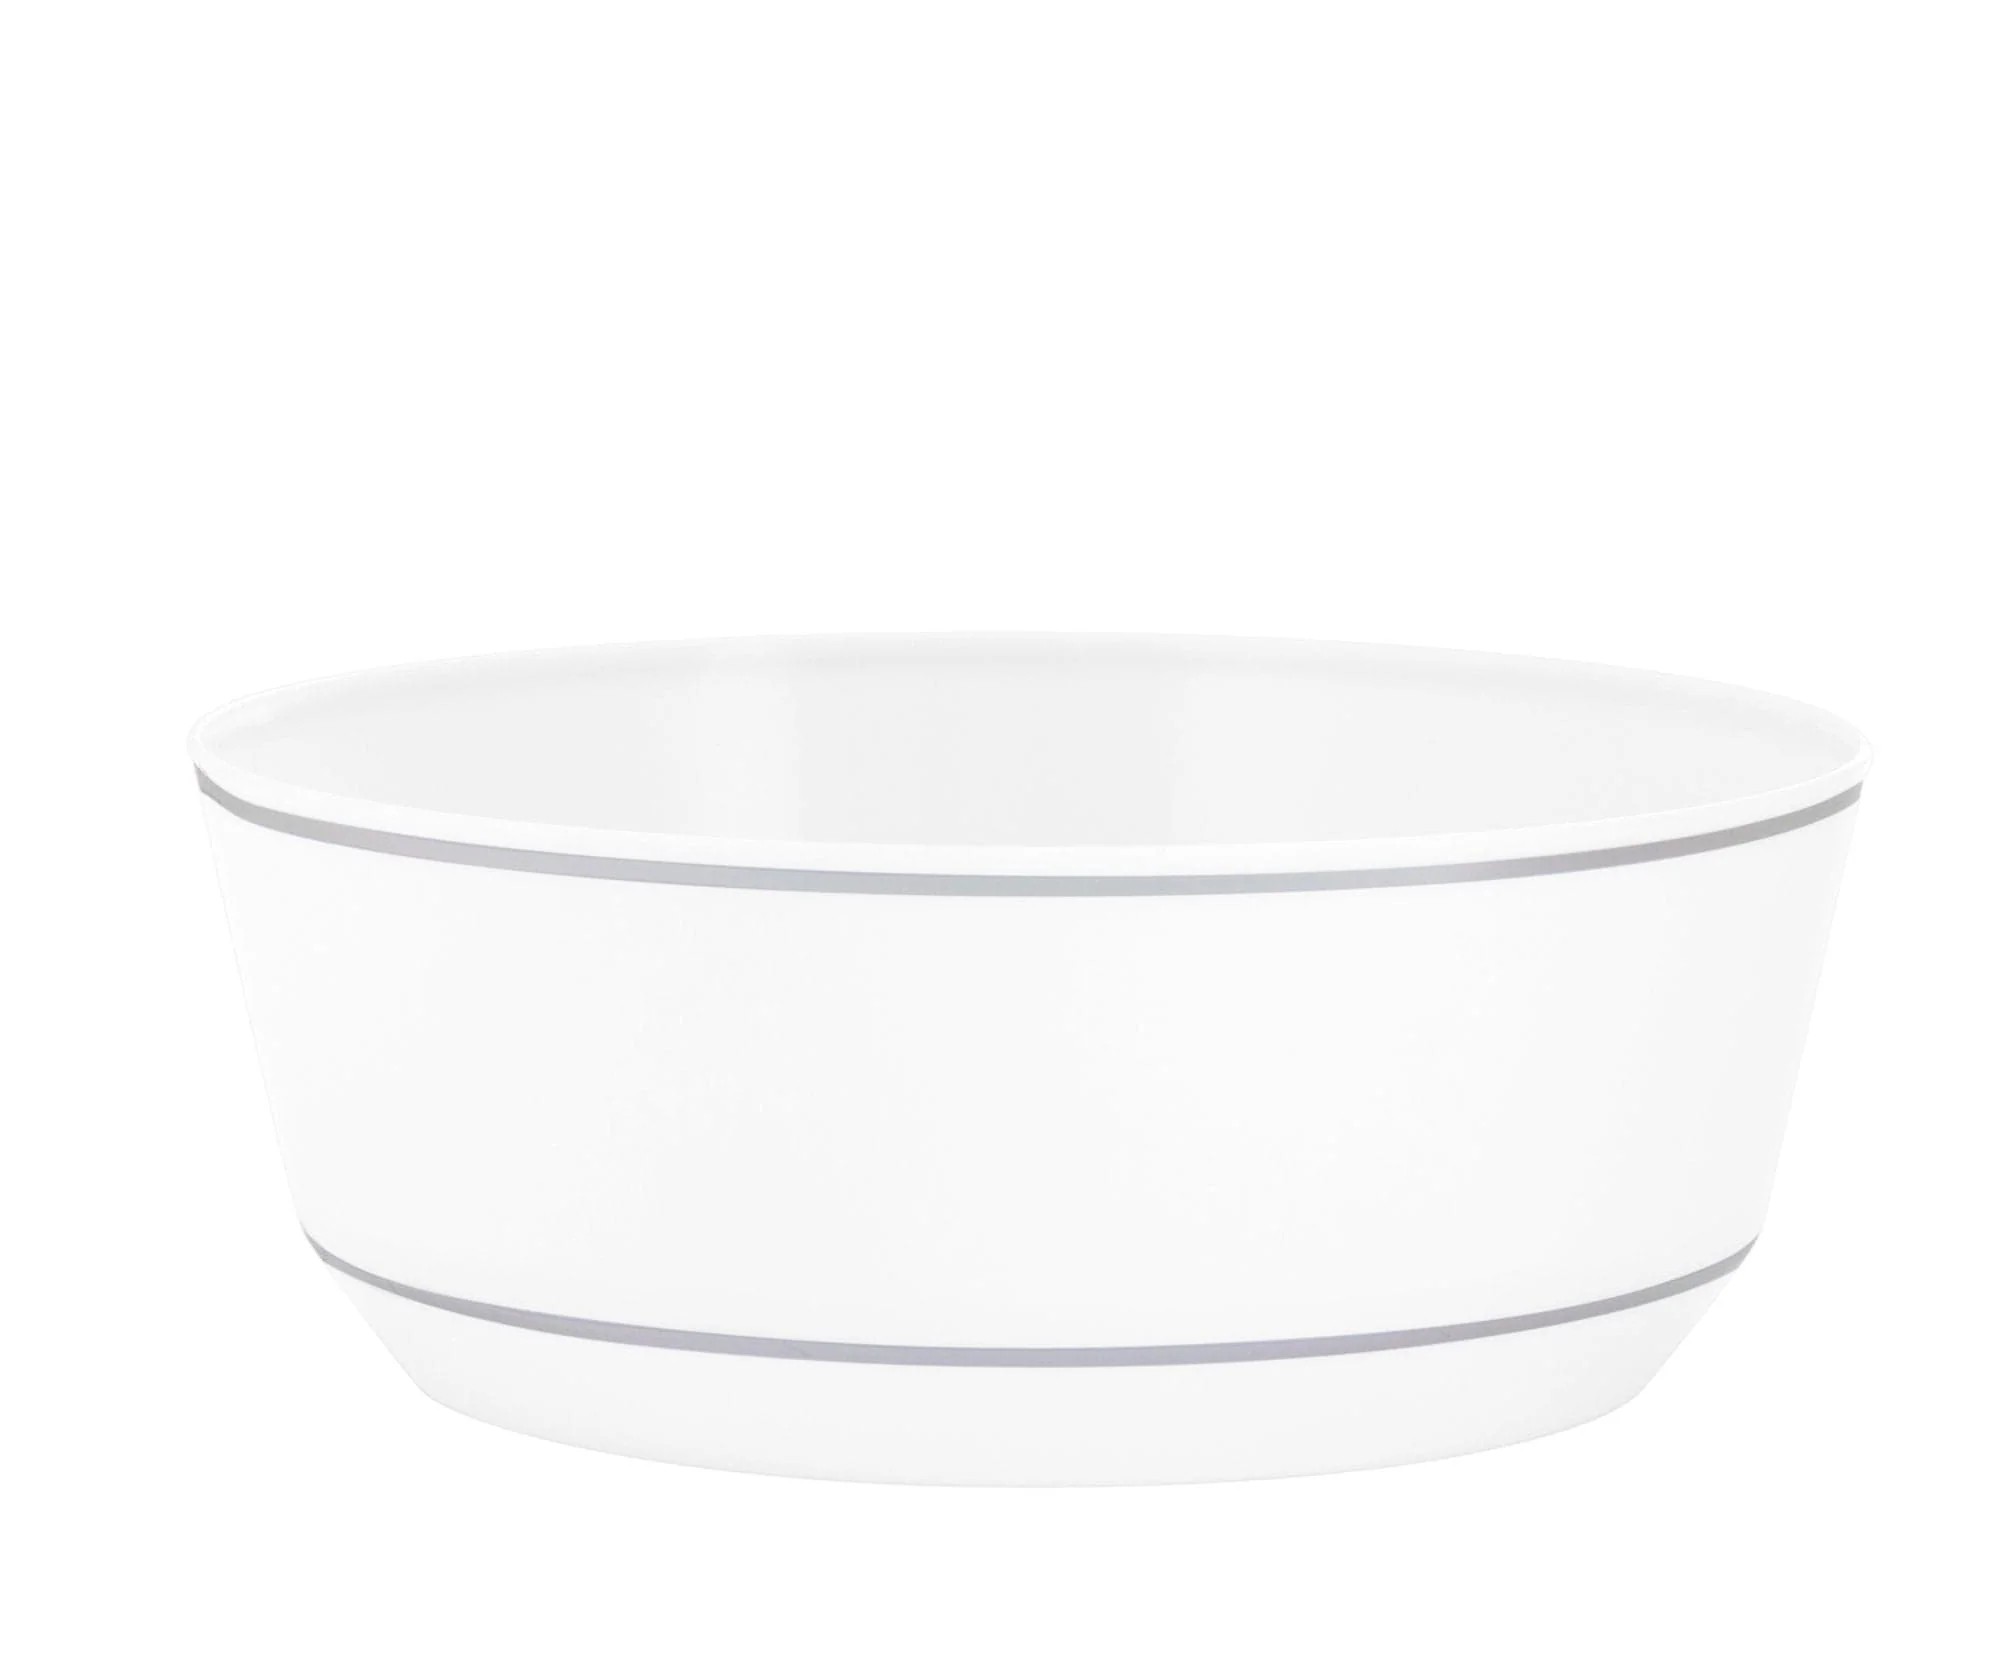 Luxe Party White Silver Rim Round Plastic Bowl 14 oz.- 10 pcs